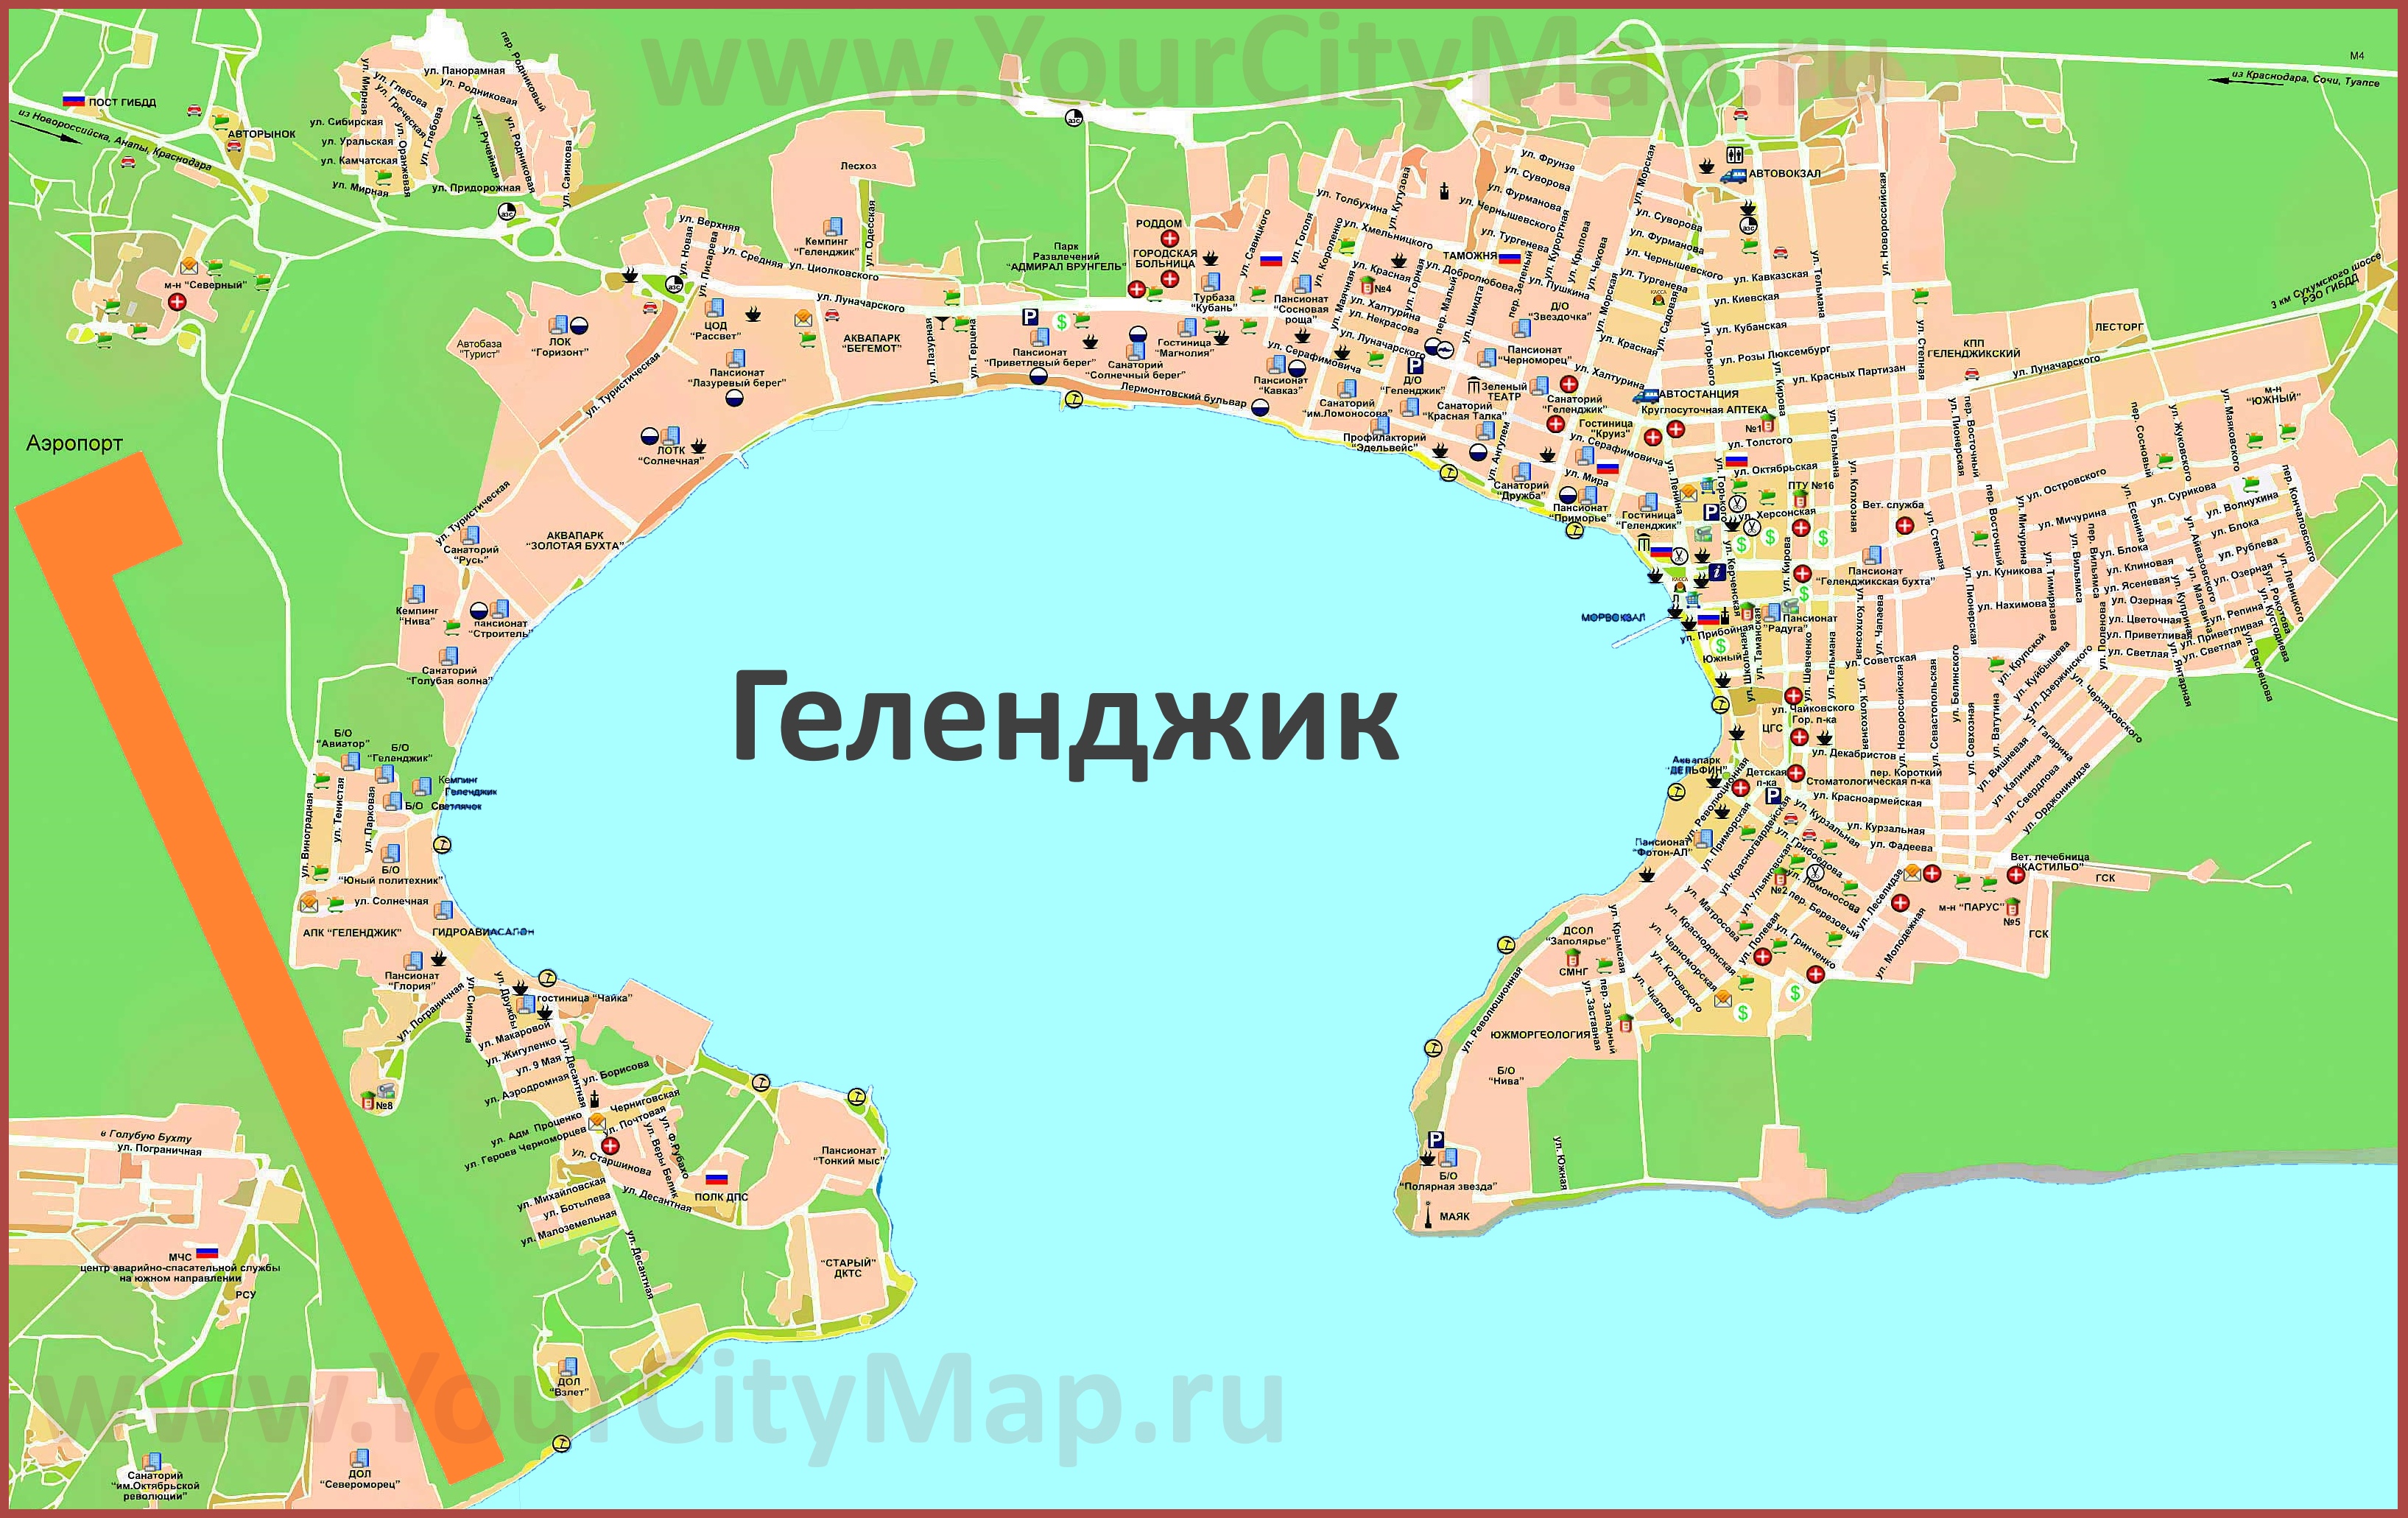 Карта Геленджика с гостевыми домами, отелями и санаториями \ufeff